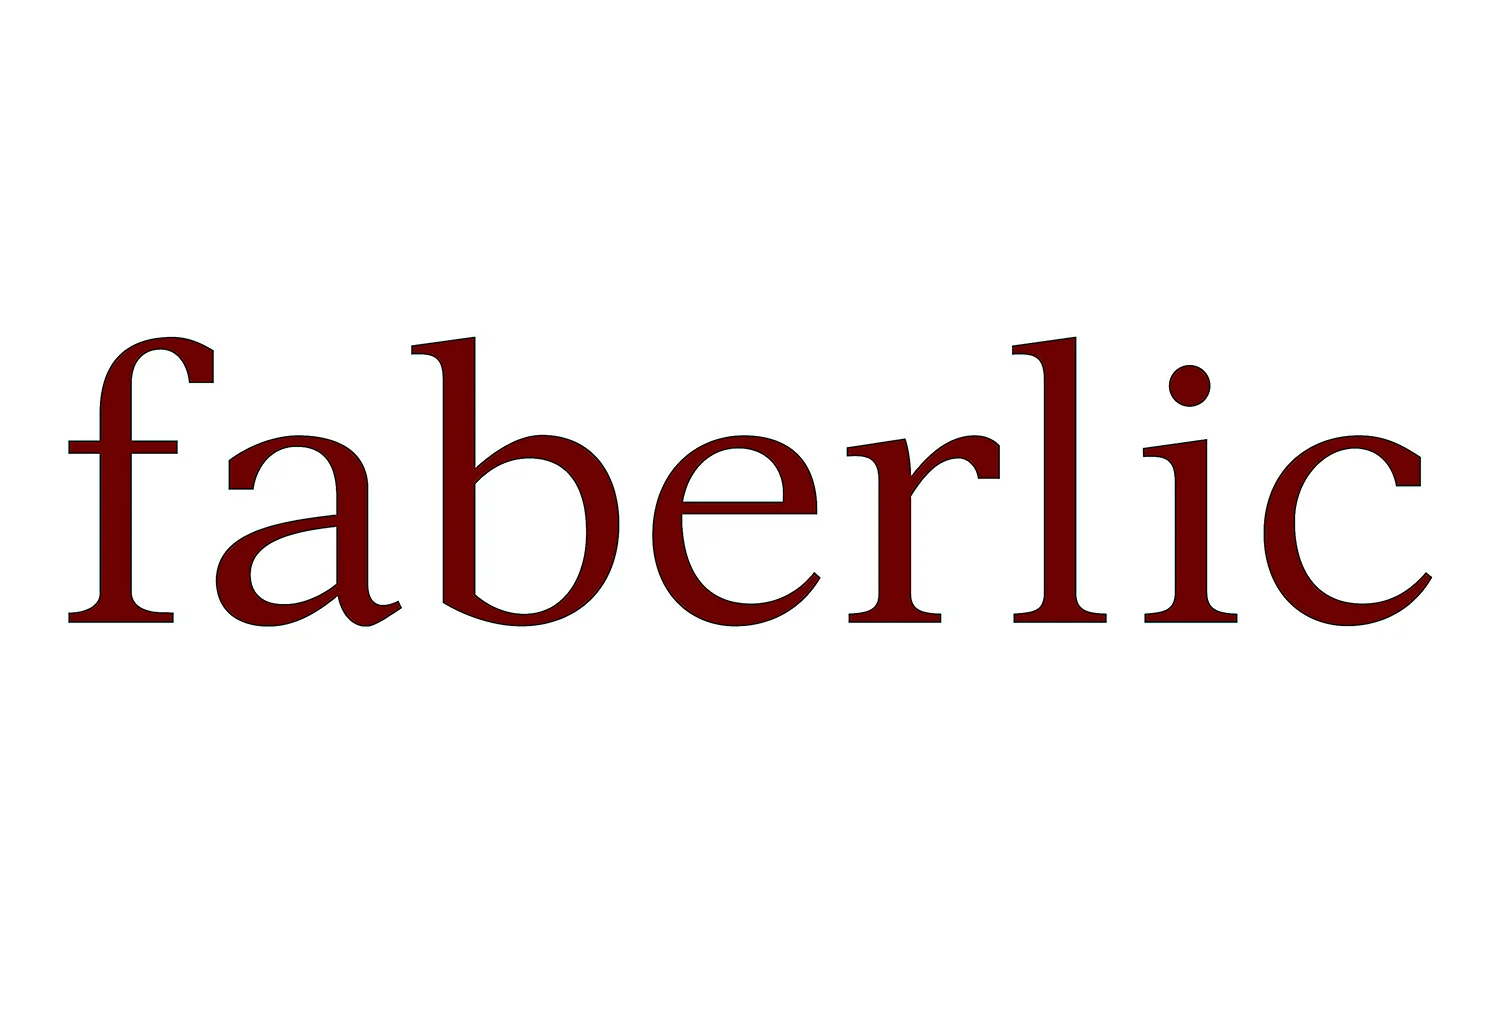 Faberlic надпись